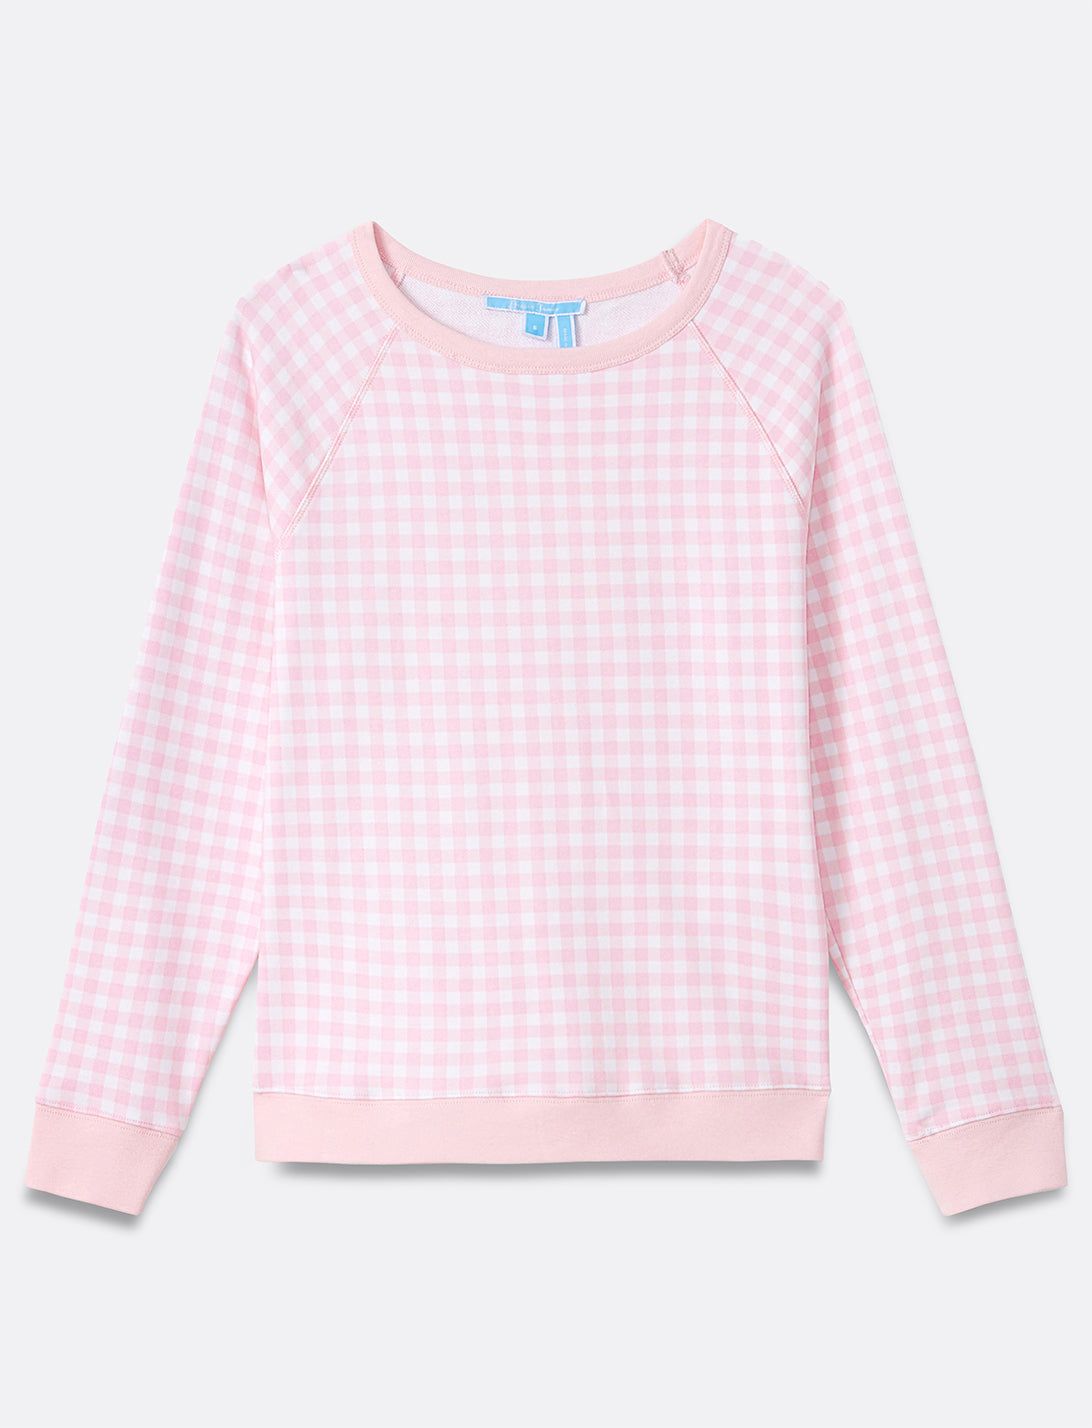 Natalie Sweatshirt in Pink Gingham | Draper James (US)